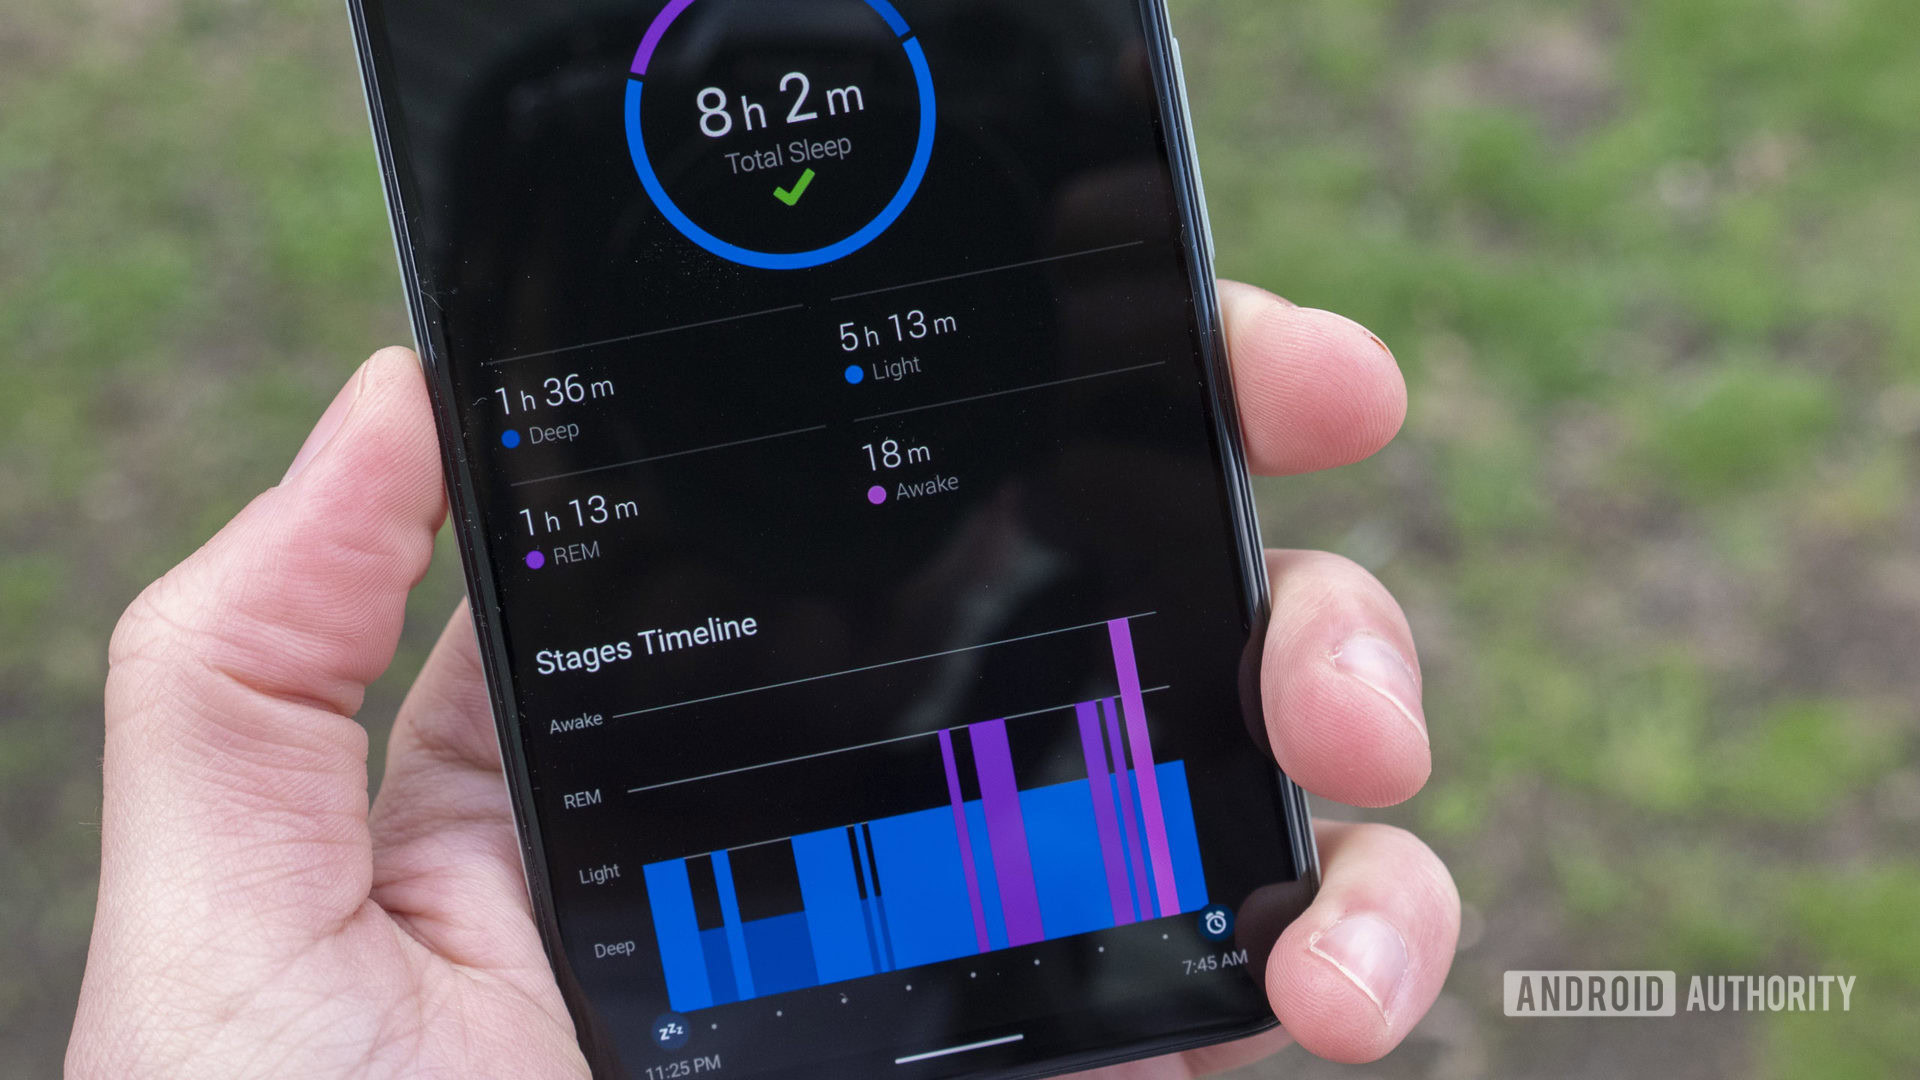 Smartphone showing Garmin connect sleep tracking